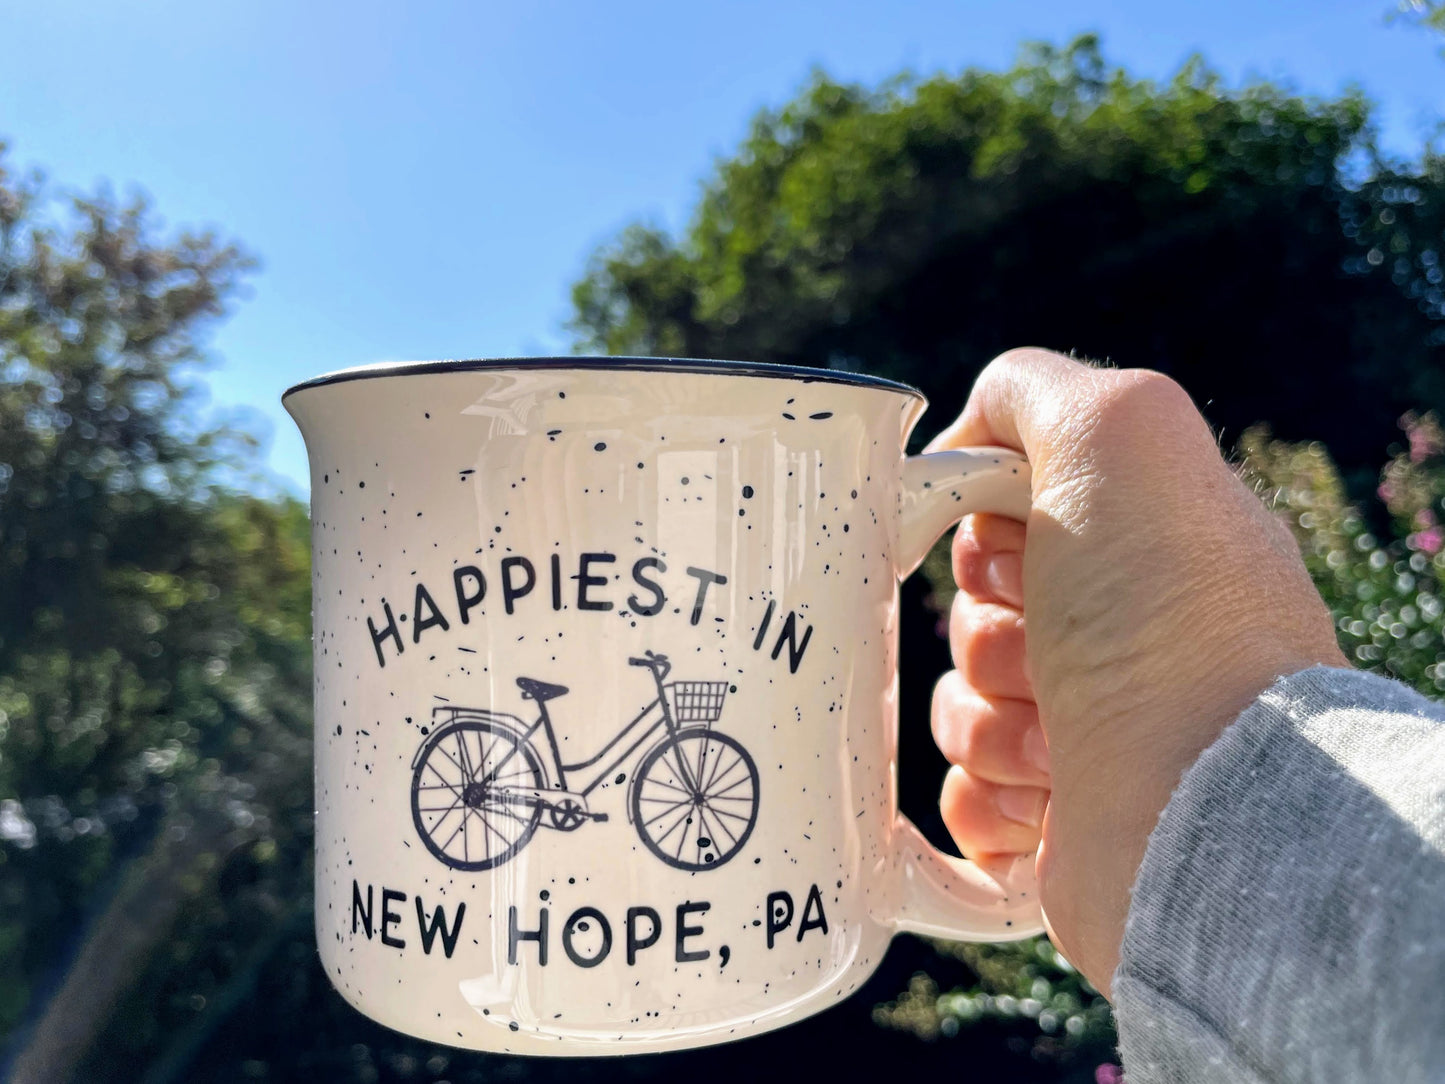 The Happiest Ceramic Camper Mug